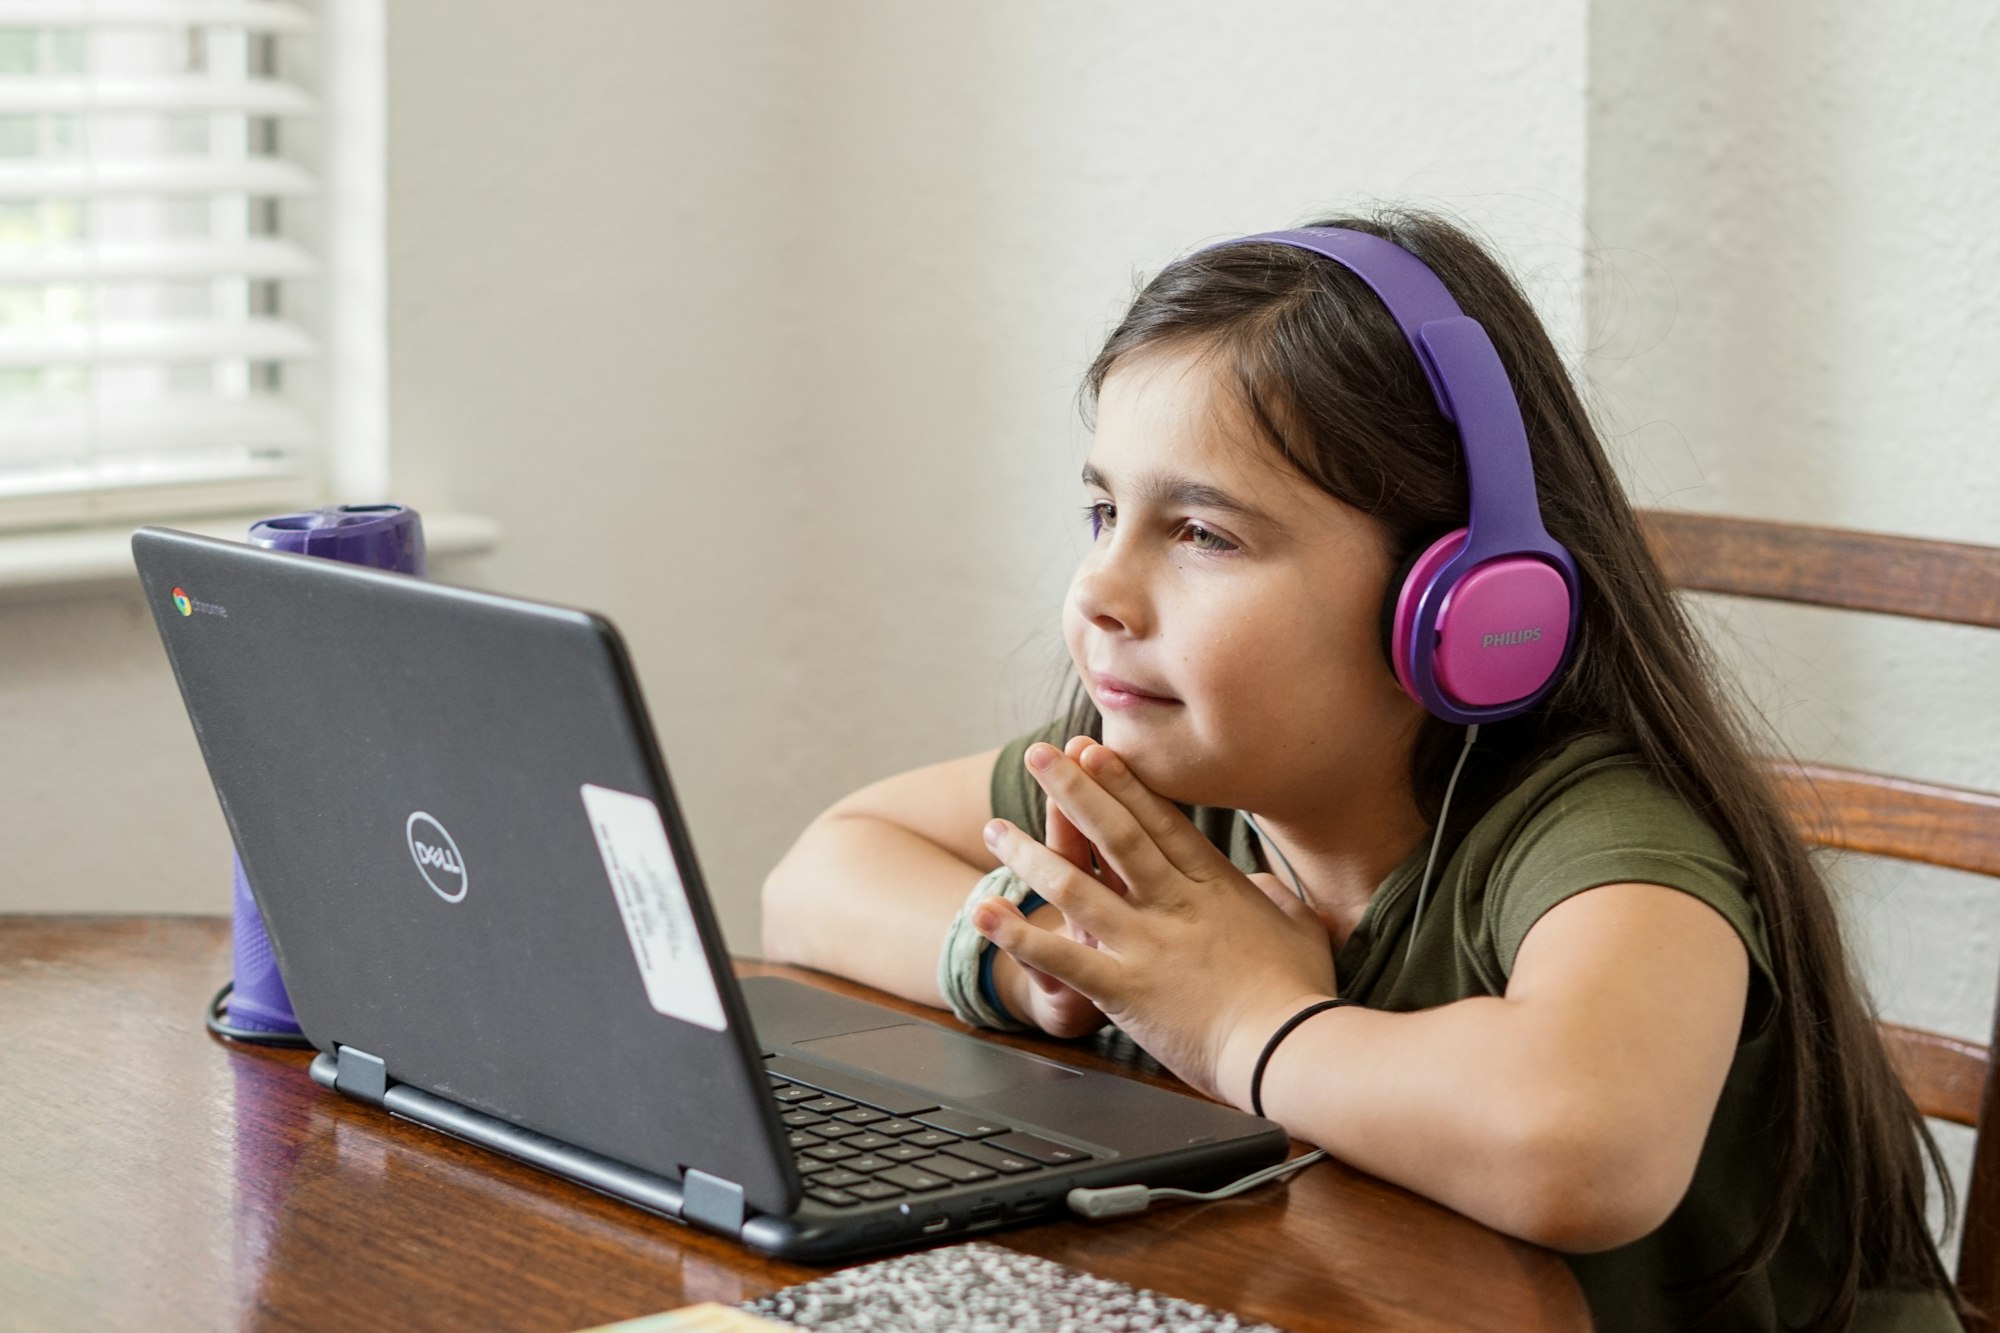 Parent's Guide to Raising Tech-Savvy Kids